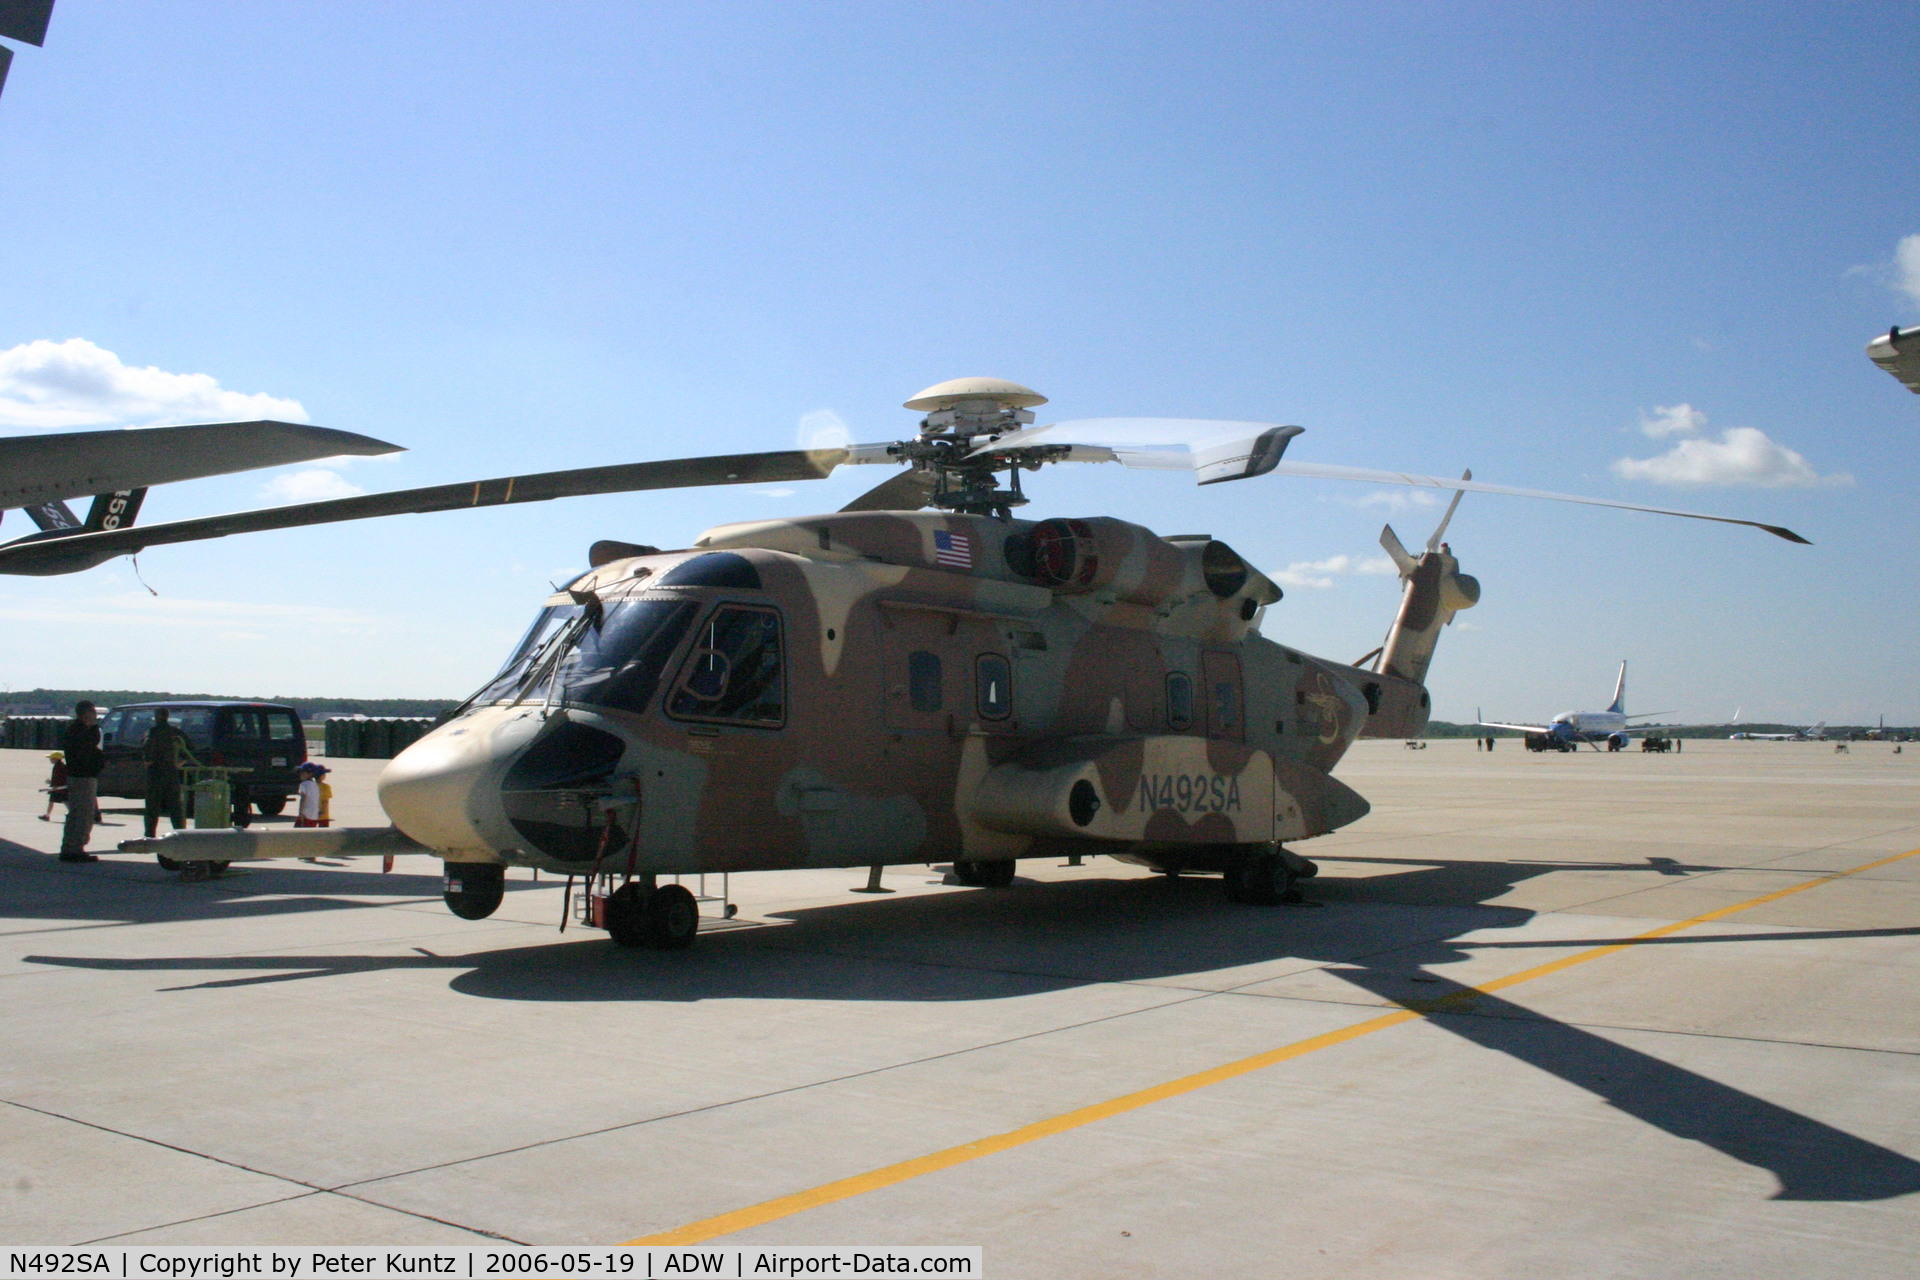 N492SA, 2001 Sikorsky S-92 C/N 920004, Taken at Andrews AFB DOD JS 2006